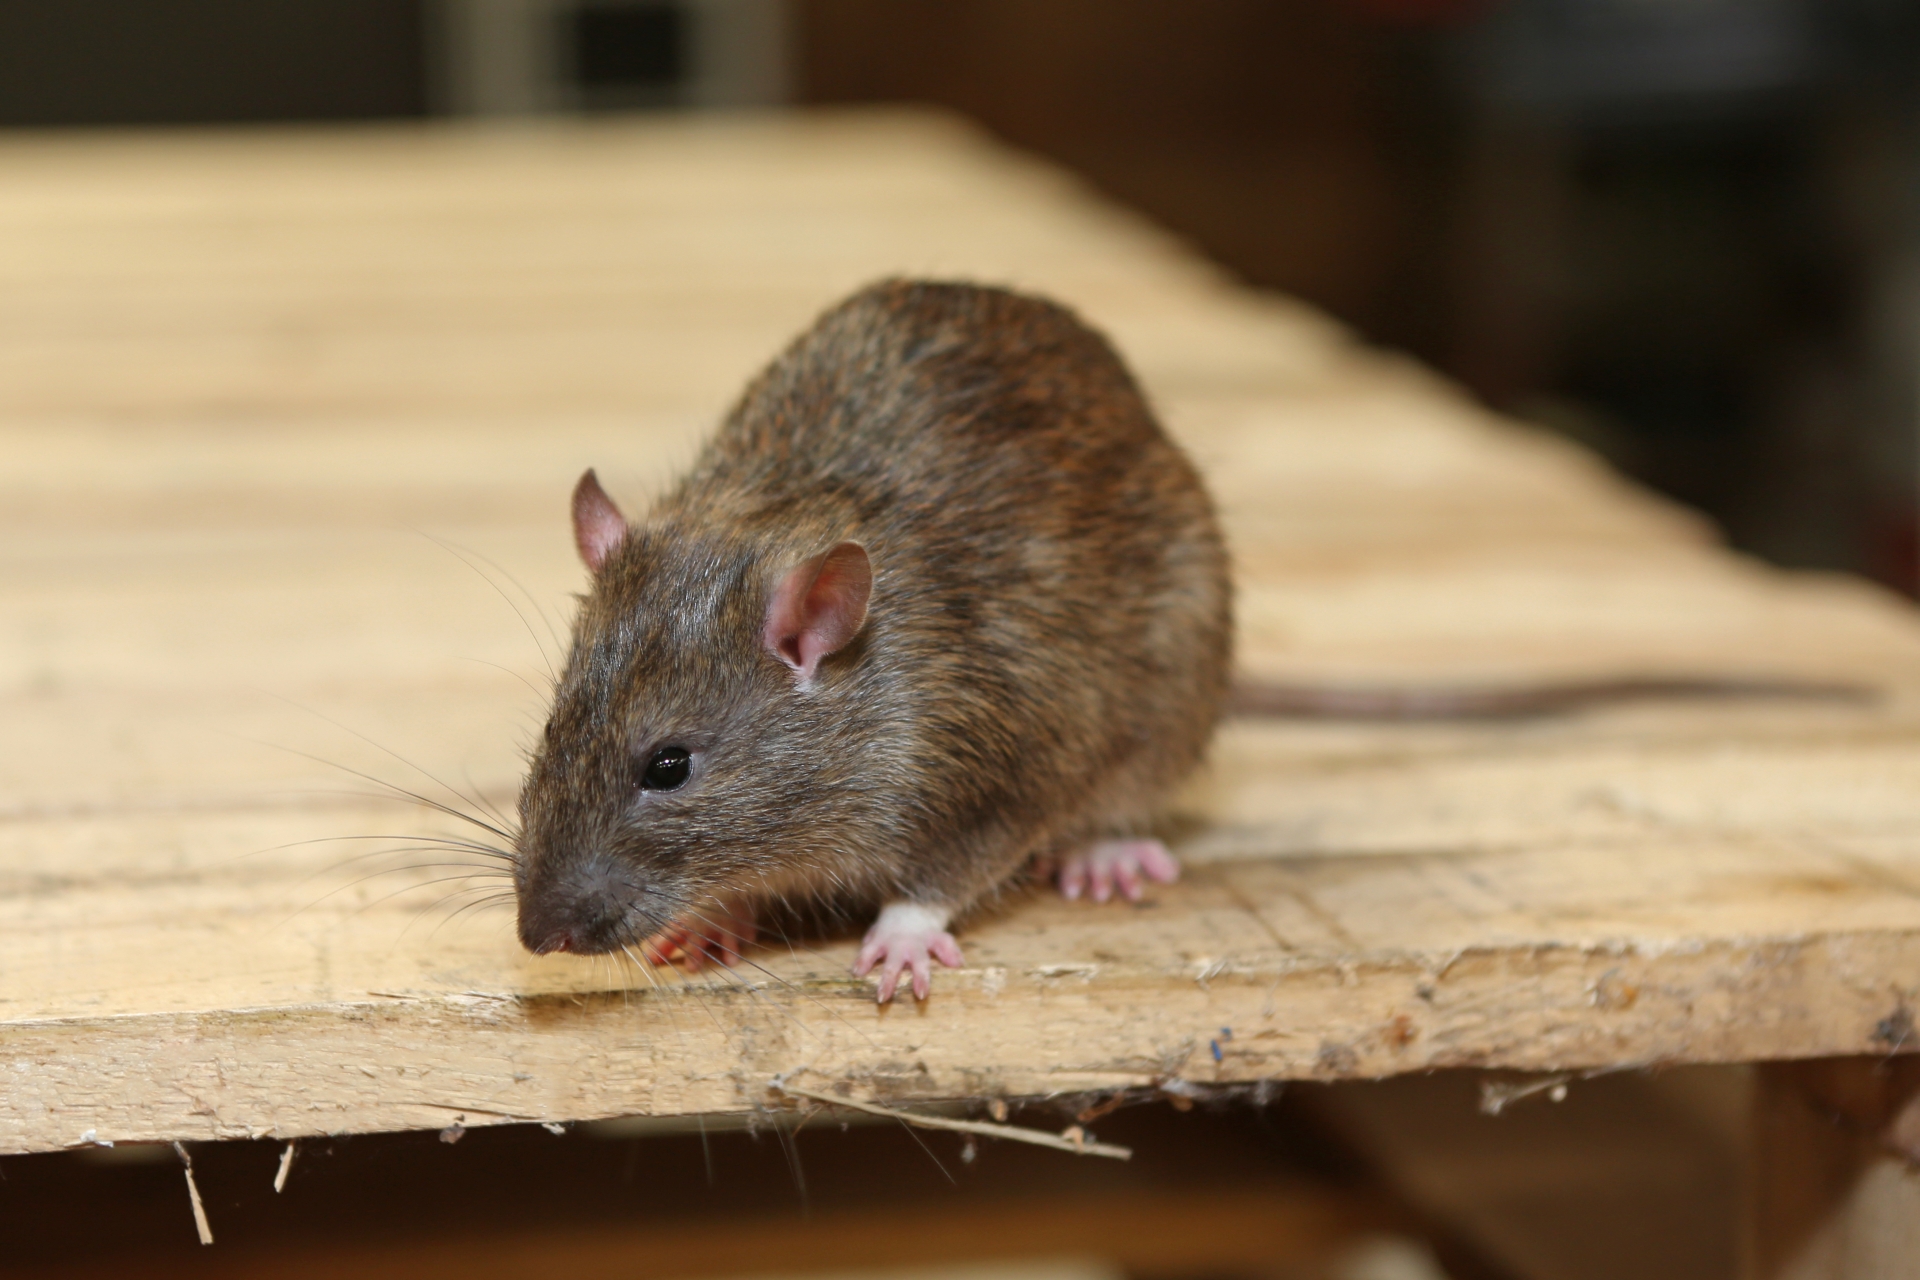 Rat Infestation, Pest Control in Shepherd's Bush, W12. Call Now 020 8166 9746